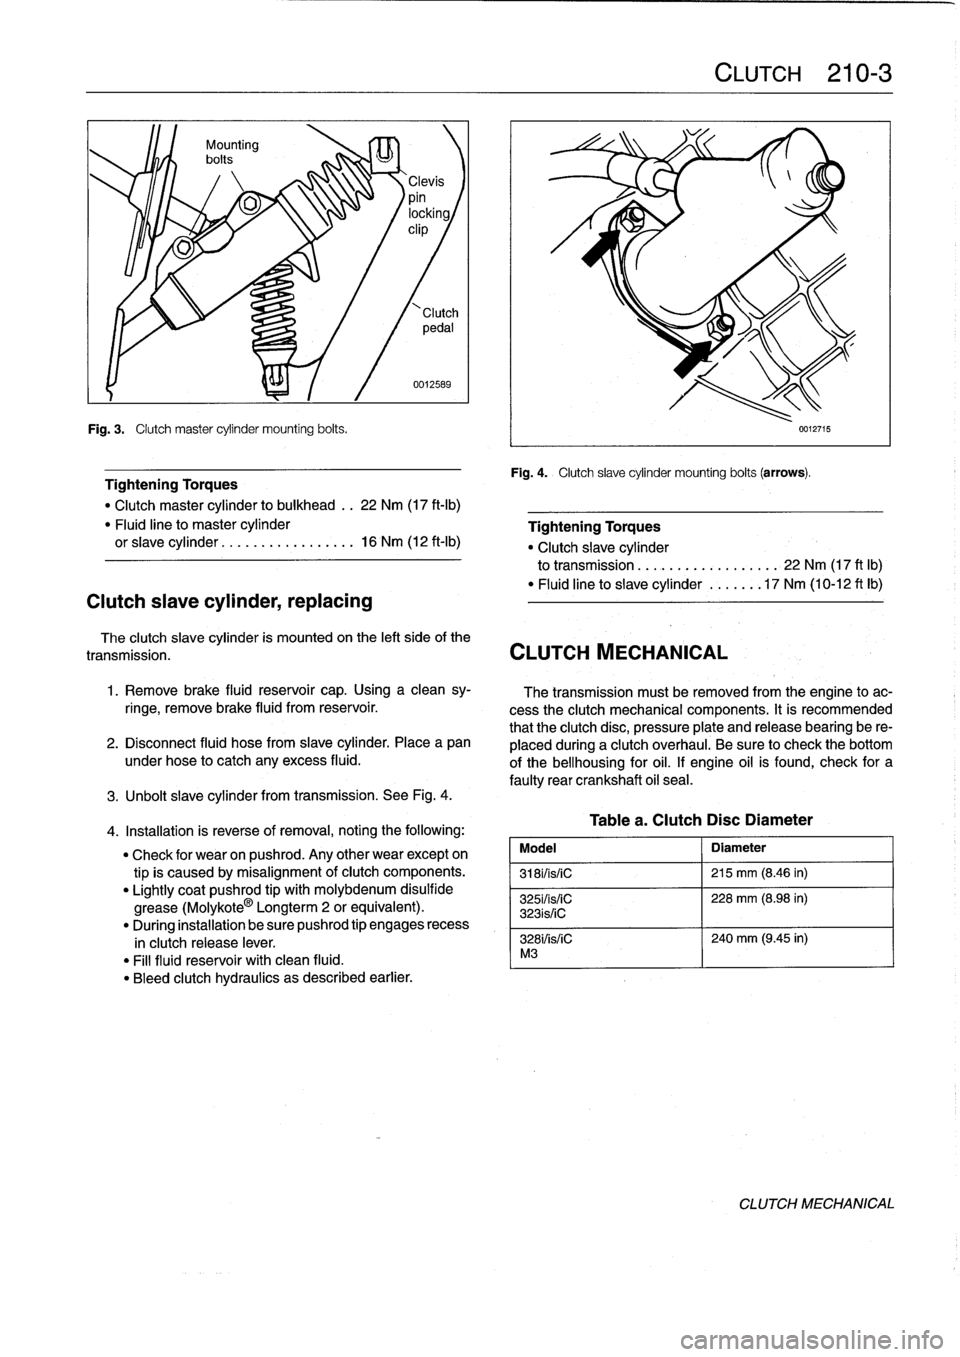 BMW 323i 1995 E36 Workshop Manual Fig
.
3
.

	

Clutch
master
cylinder
mounting
bolts
.

Clutch
slave
cylinder,
replacing

0012589

Tightening
Torques

"
Clutch
master
cylinder
to
bulkhead
..
22
Nm
(17
ft-Ib)
"
Fluid
line
to
master
cy